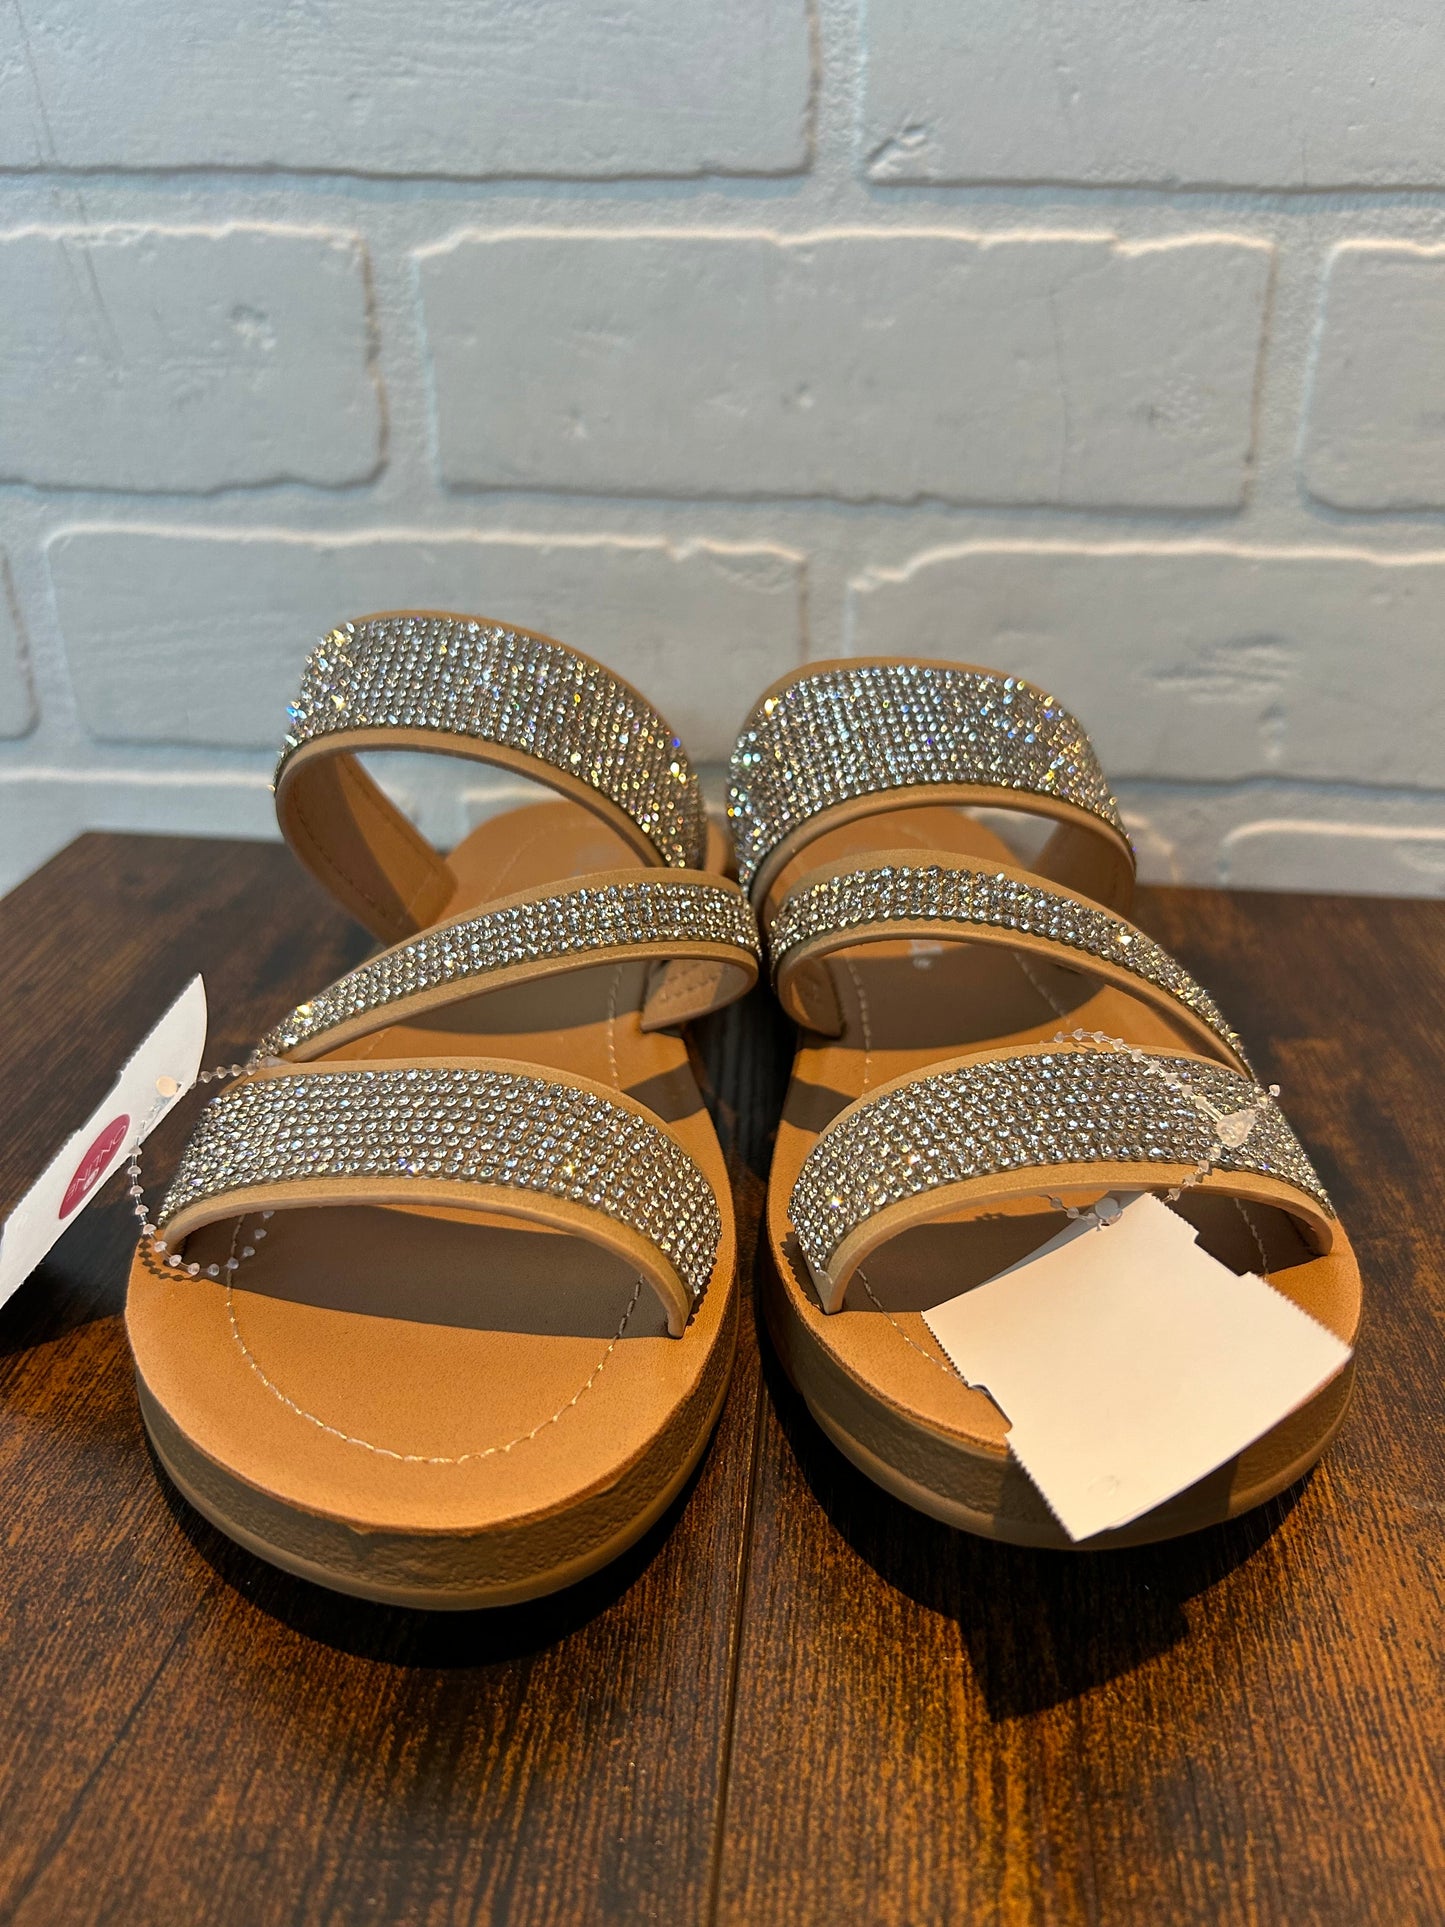 Silver & Tan Sandals Flats Soda, Size 6